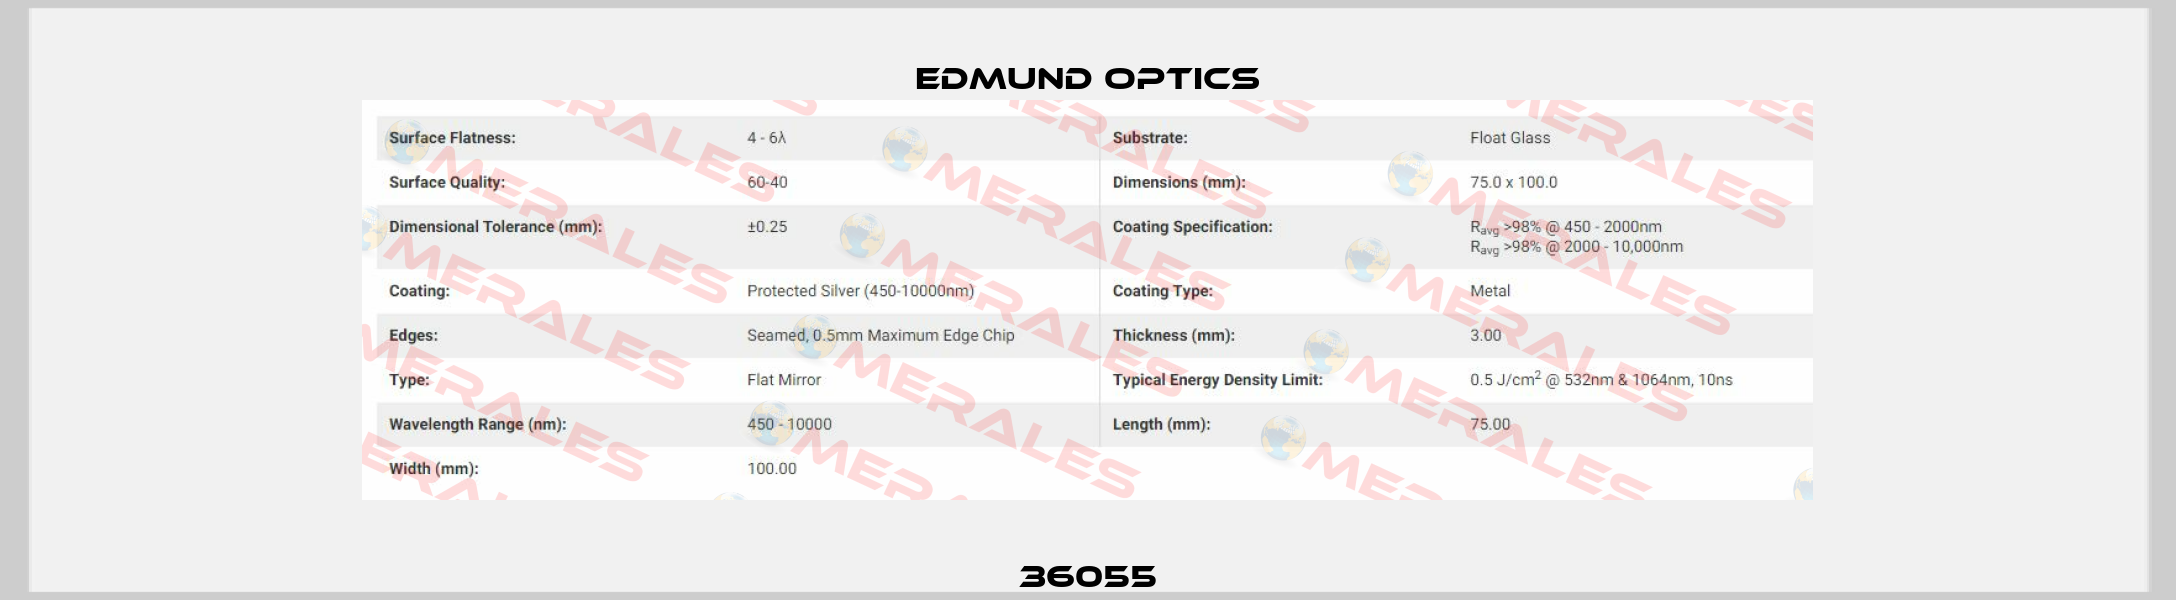 36055 Edmund Optics